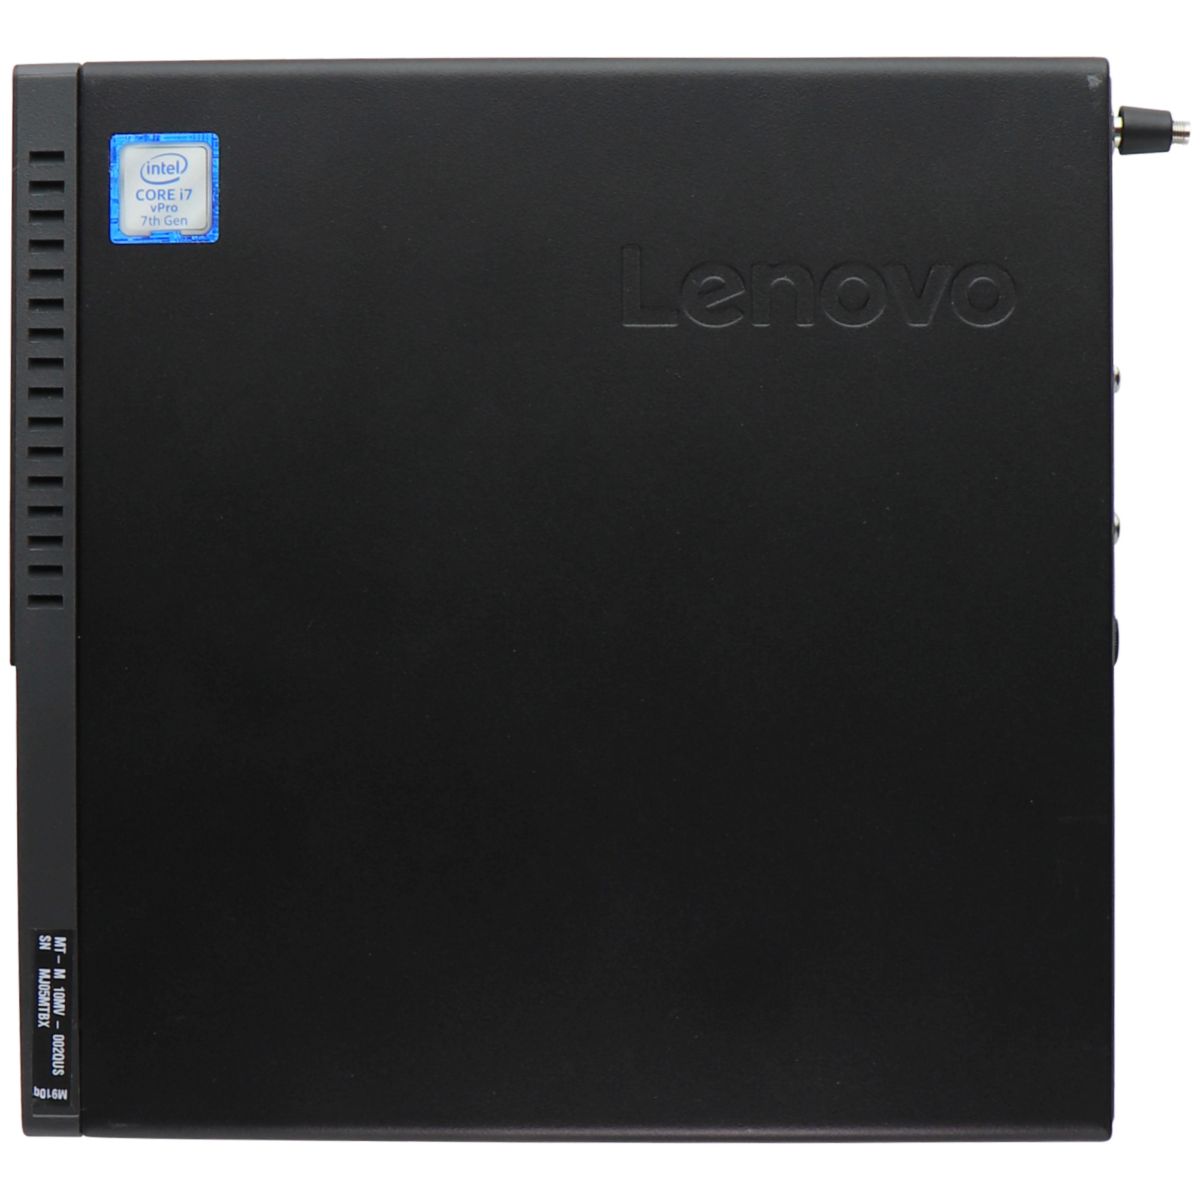 Lenovo ThinkCentre M910q Desktop (002QUS) i7-7700T / HD 630 / 512GB SSD / 16GB PC Desktops & All-In-Ones Lenovo    - Simple Cell Bulk Wholesale Pricing - USA Seller